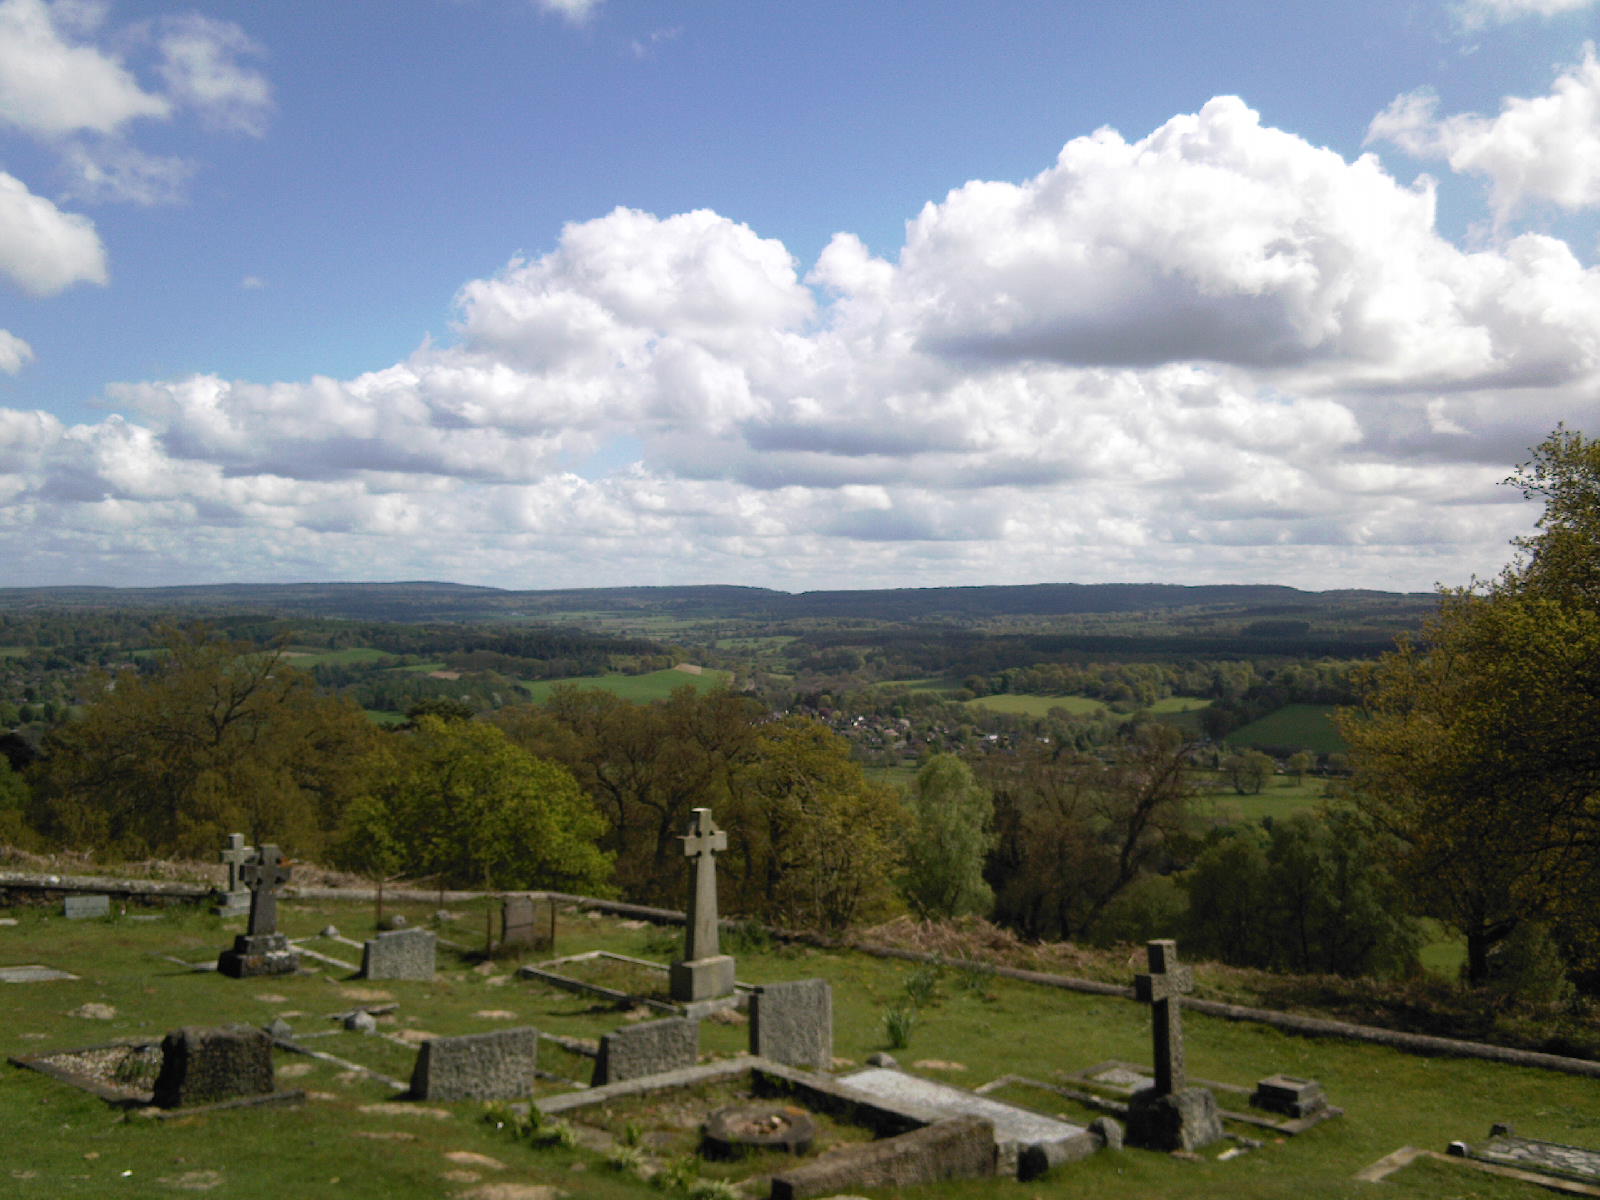 Hillside cemetery views across countryside